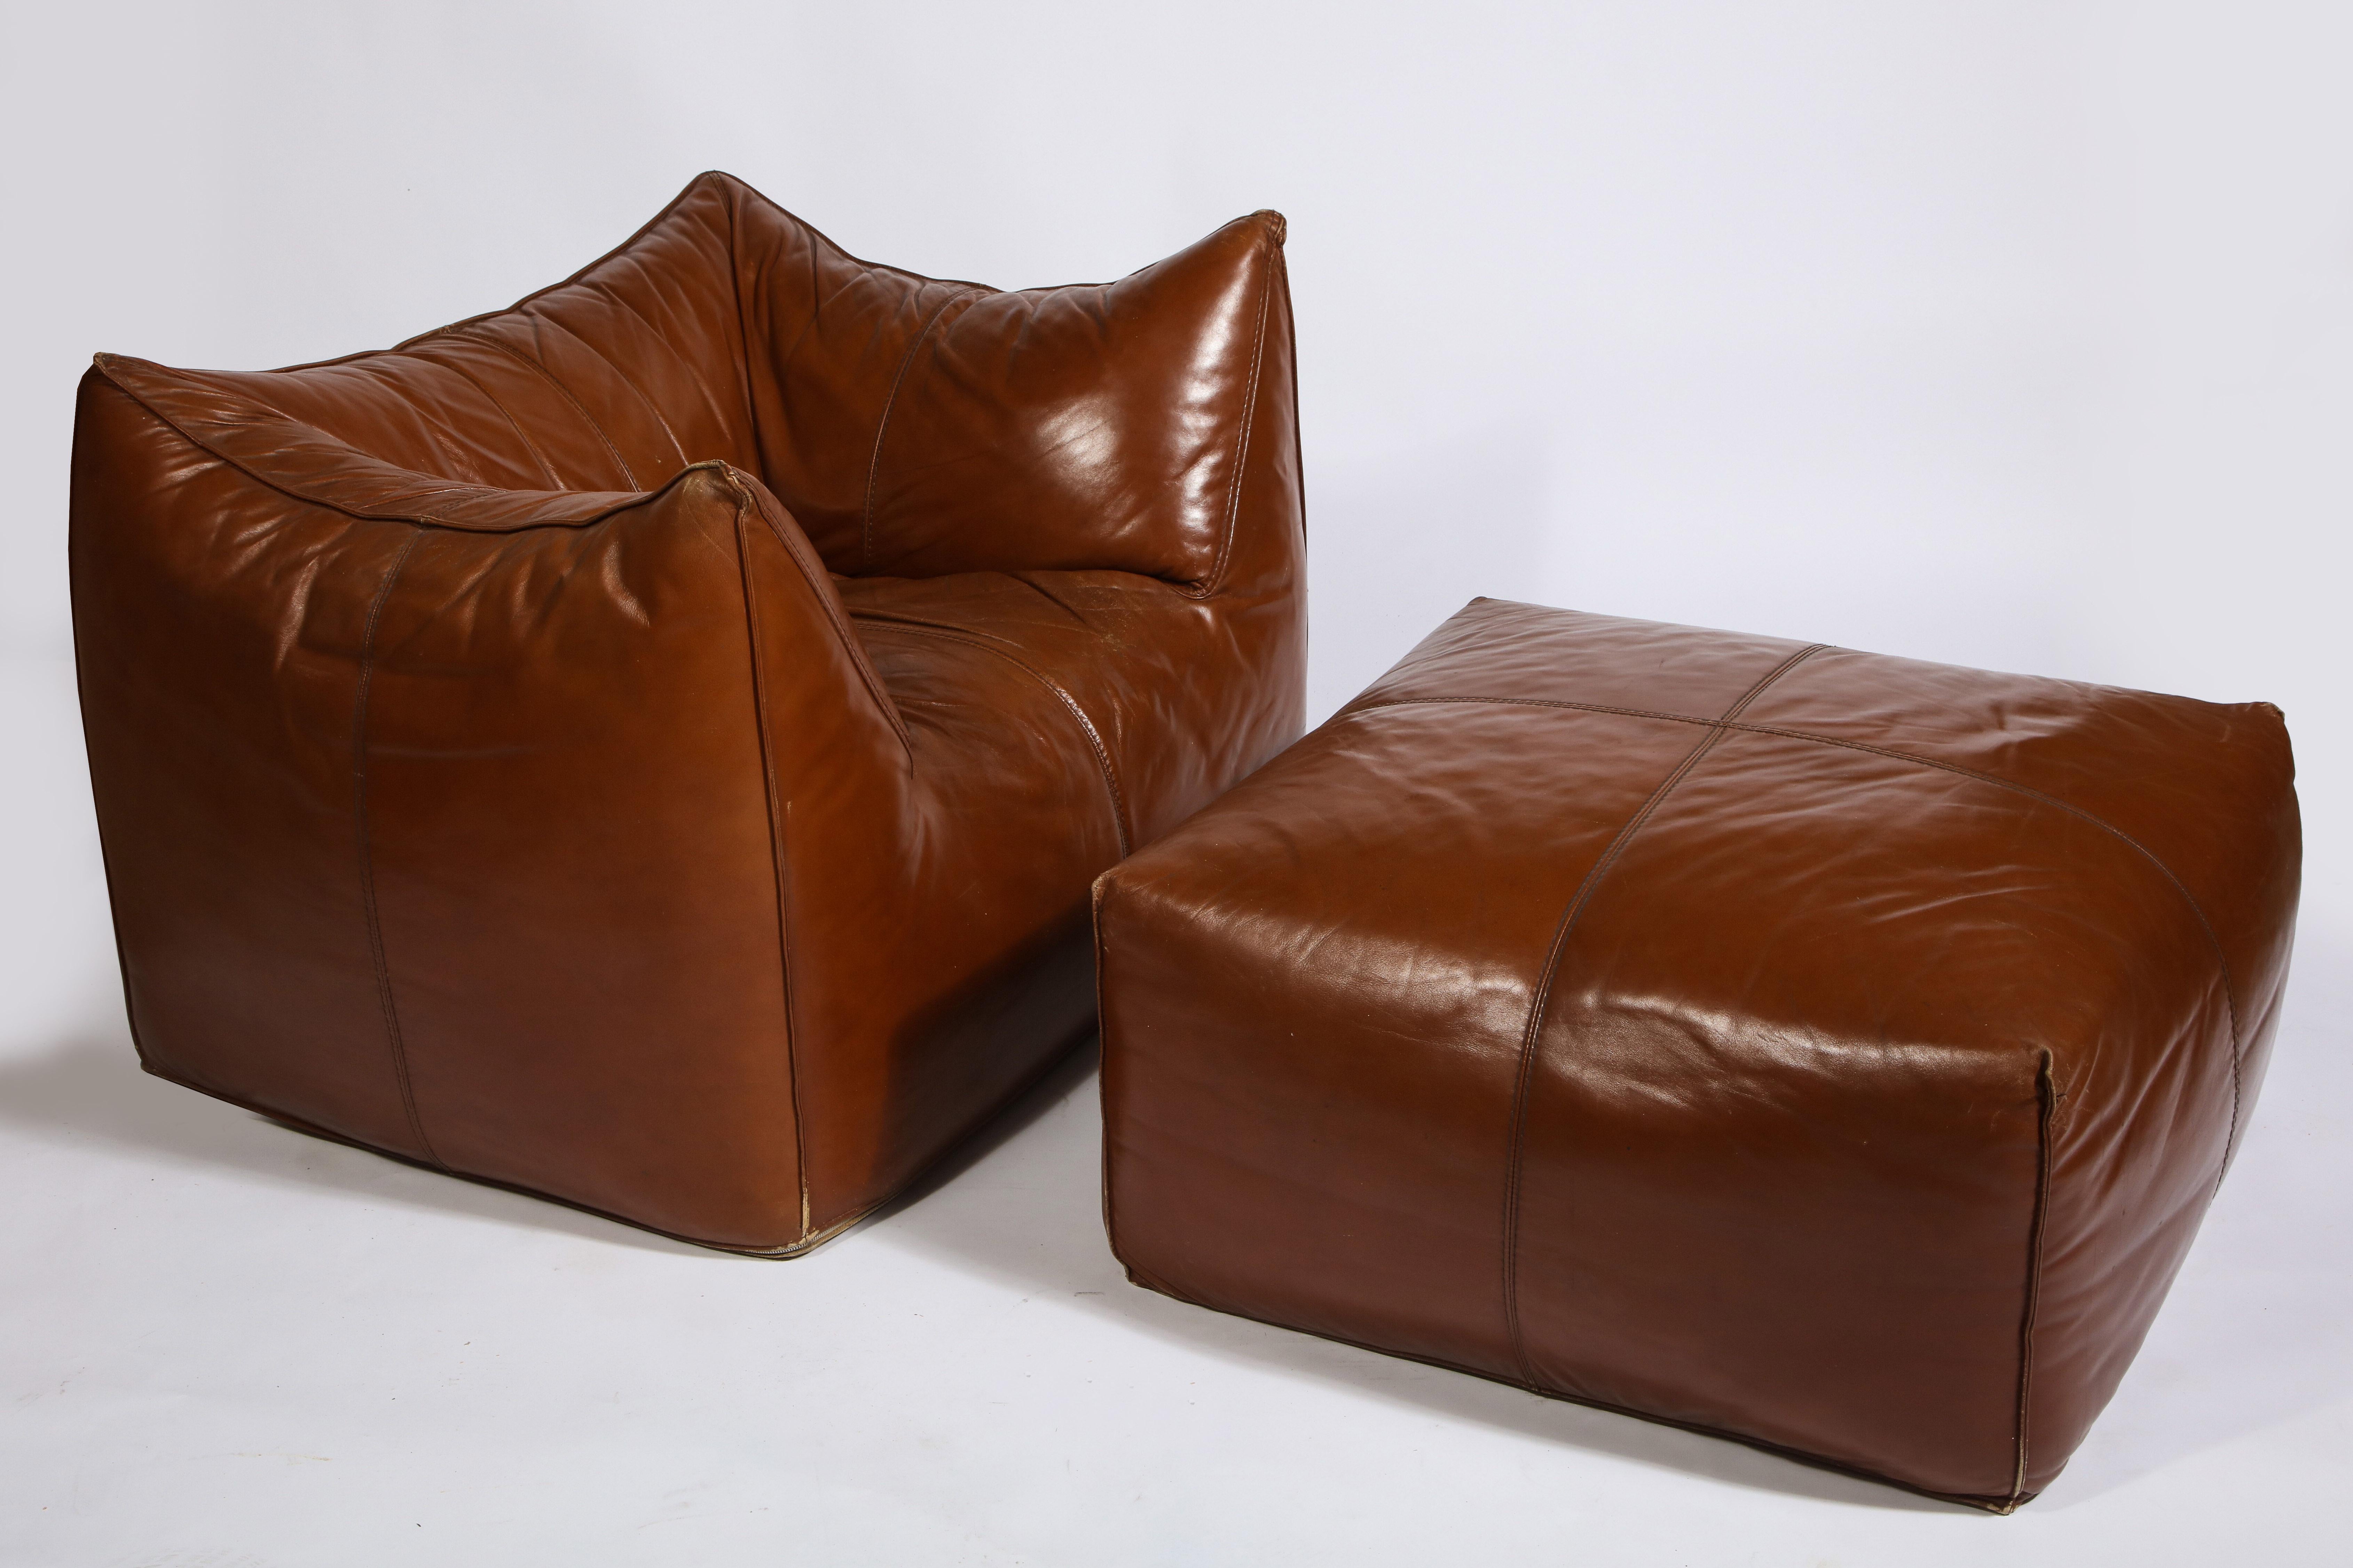 Late 20th Century Mario Bellini Cognac Brown Leather Sofa, Chair, Ottoman Le Bambole Set, Italy